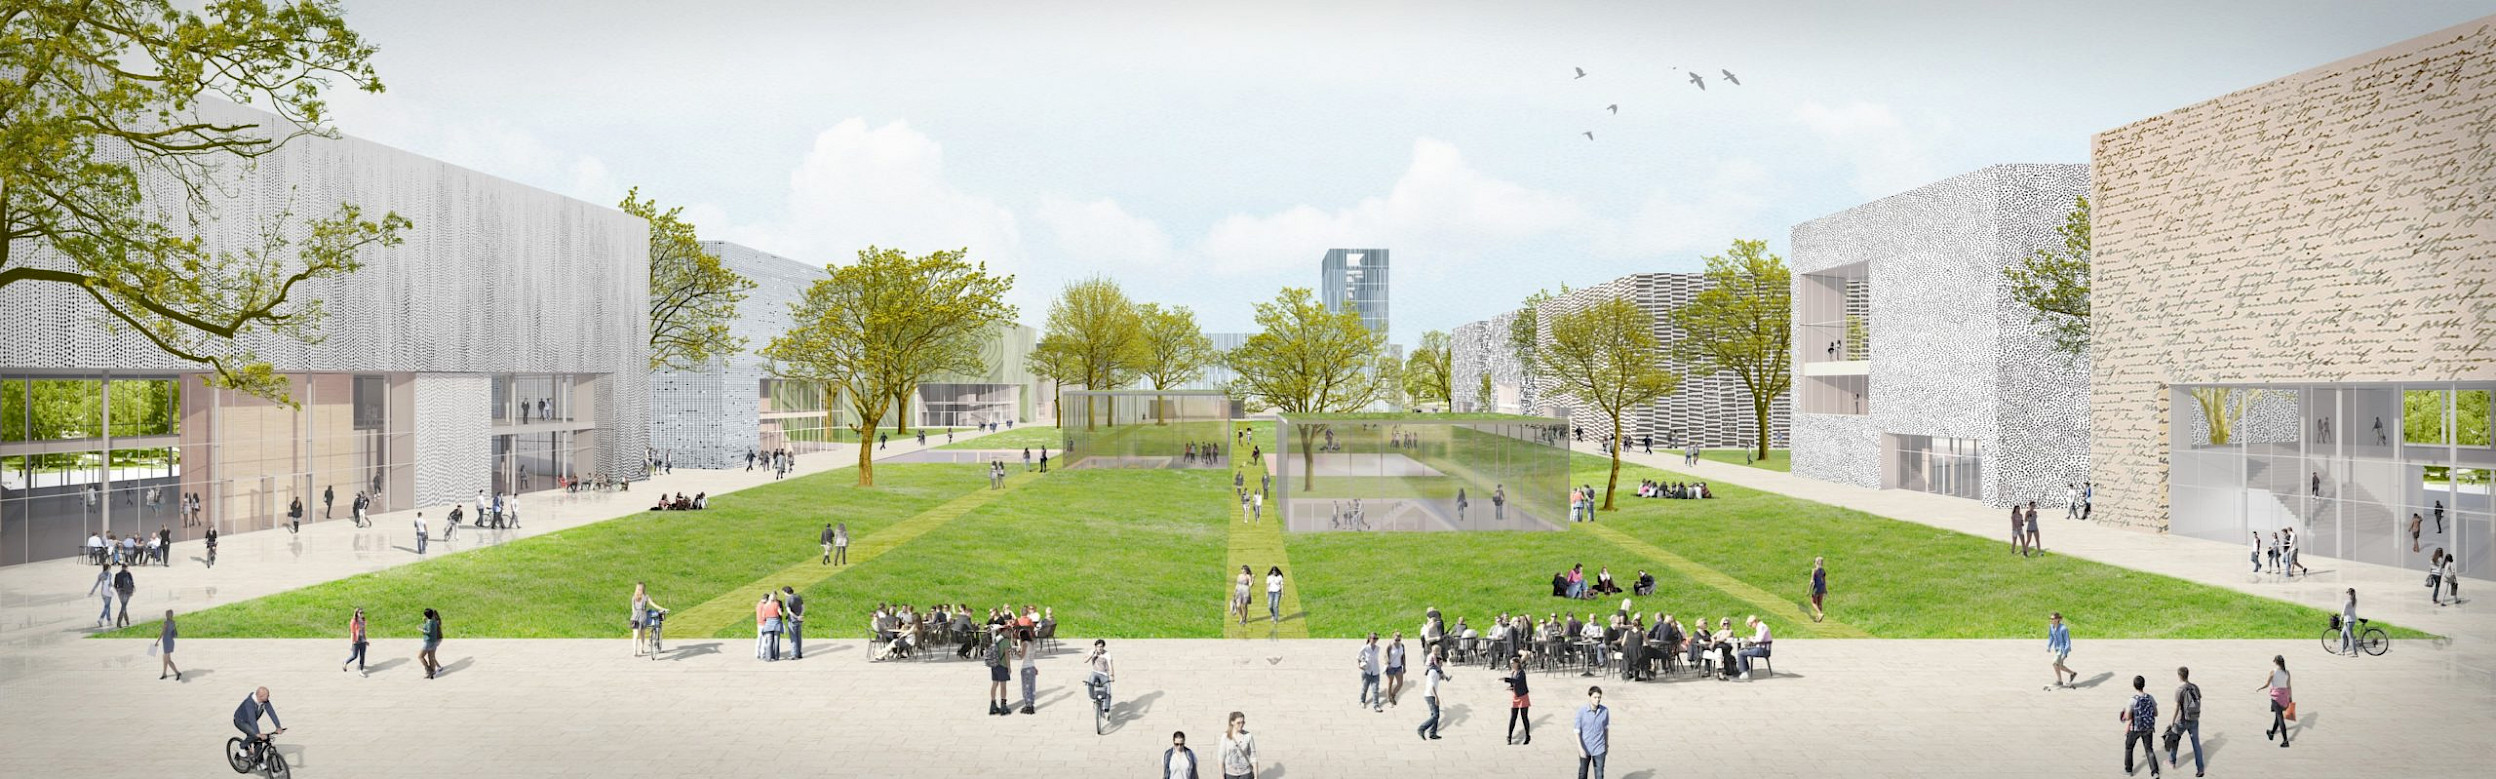 Campus Grüne Mitte. Copyright: Ferdinand Heide Architekt/TOPOS Stadtplanung Landschaftsplanung Stadtforschung